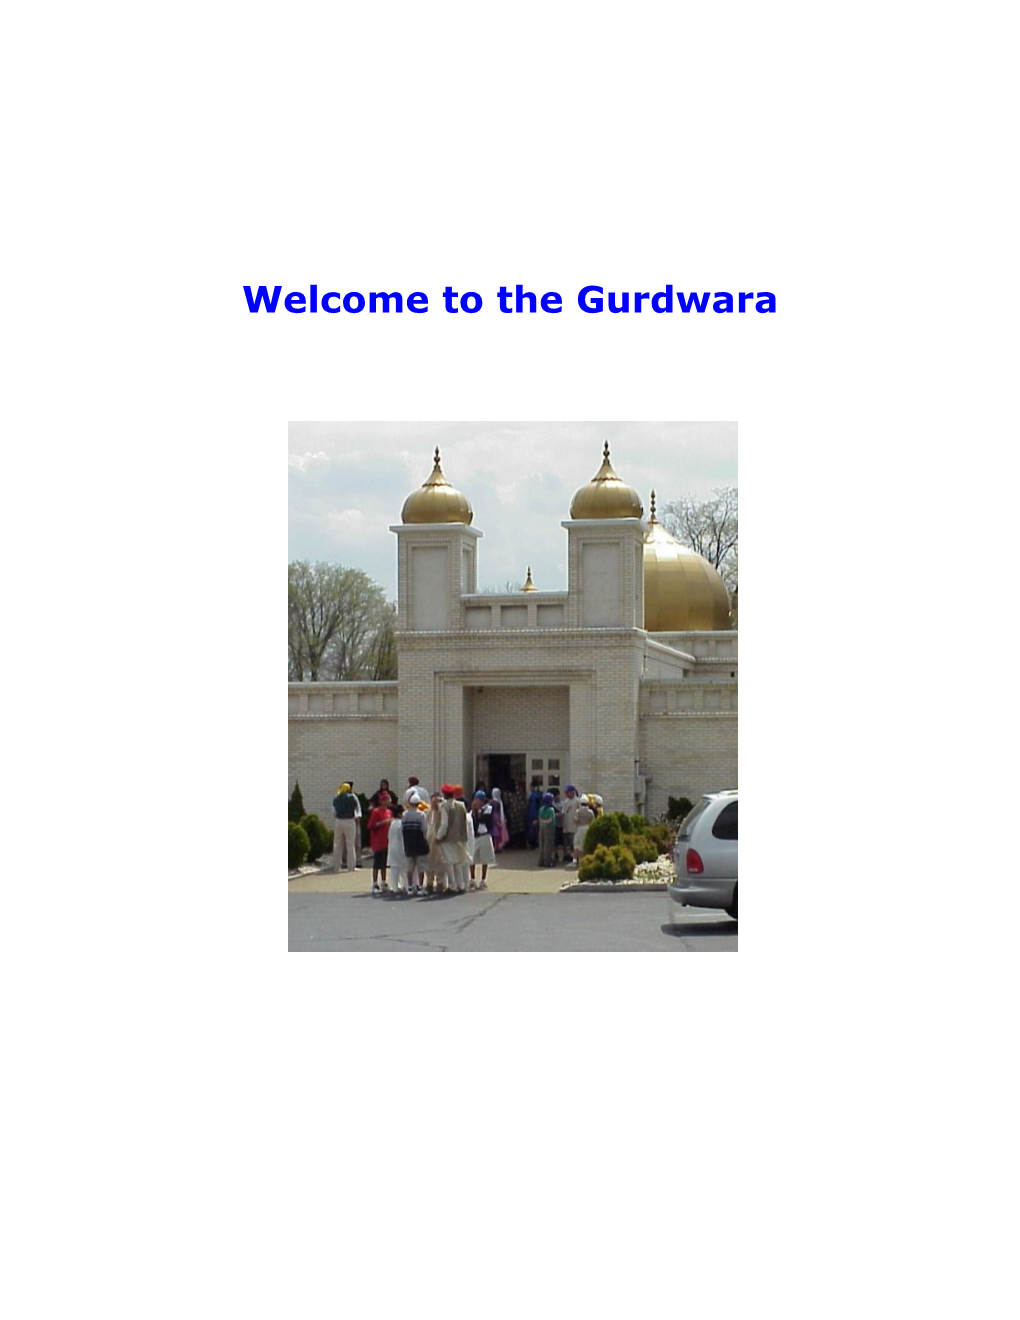 The Gurdwara